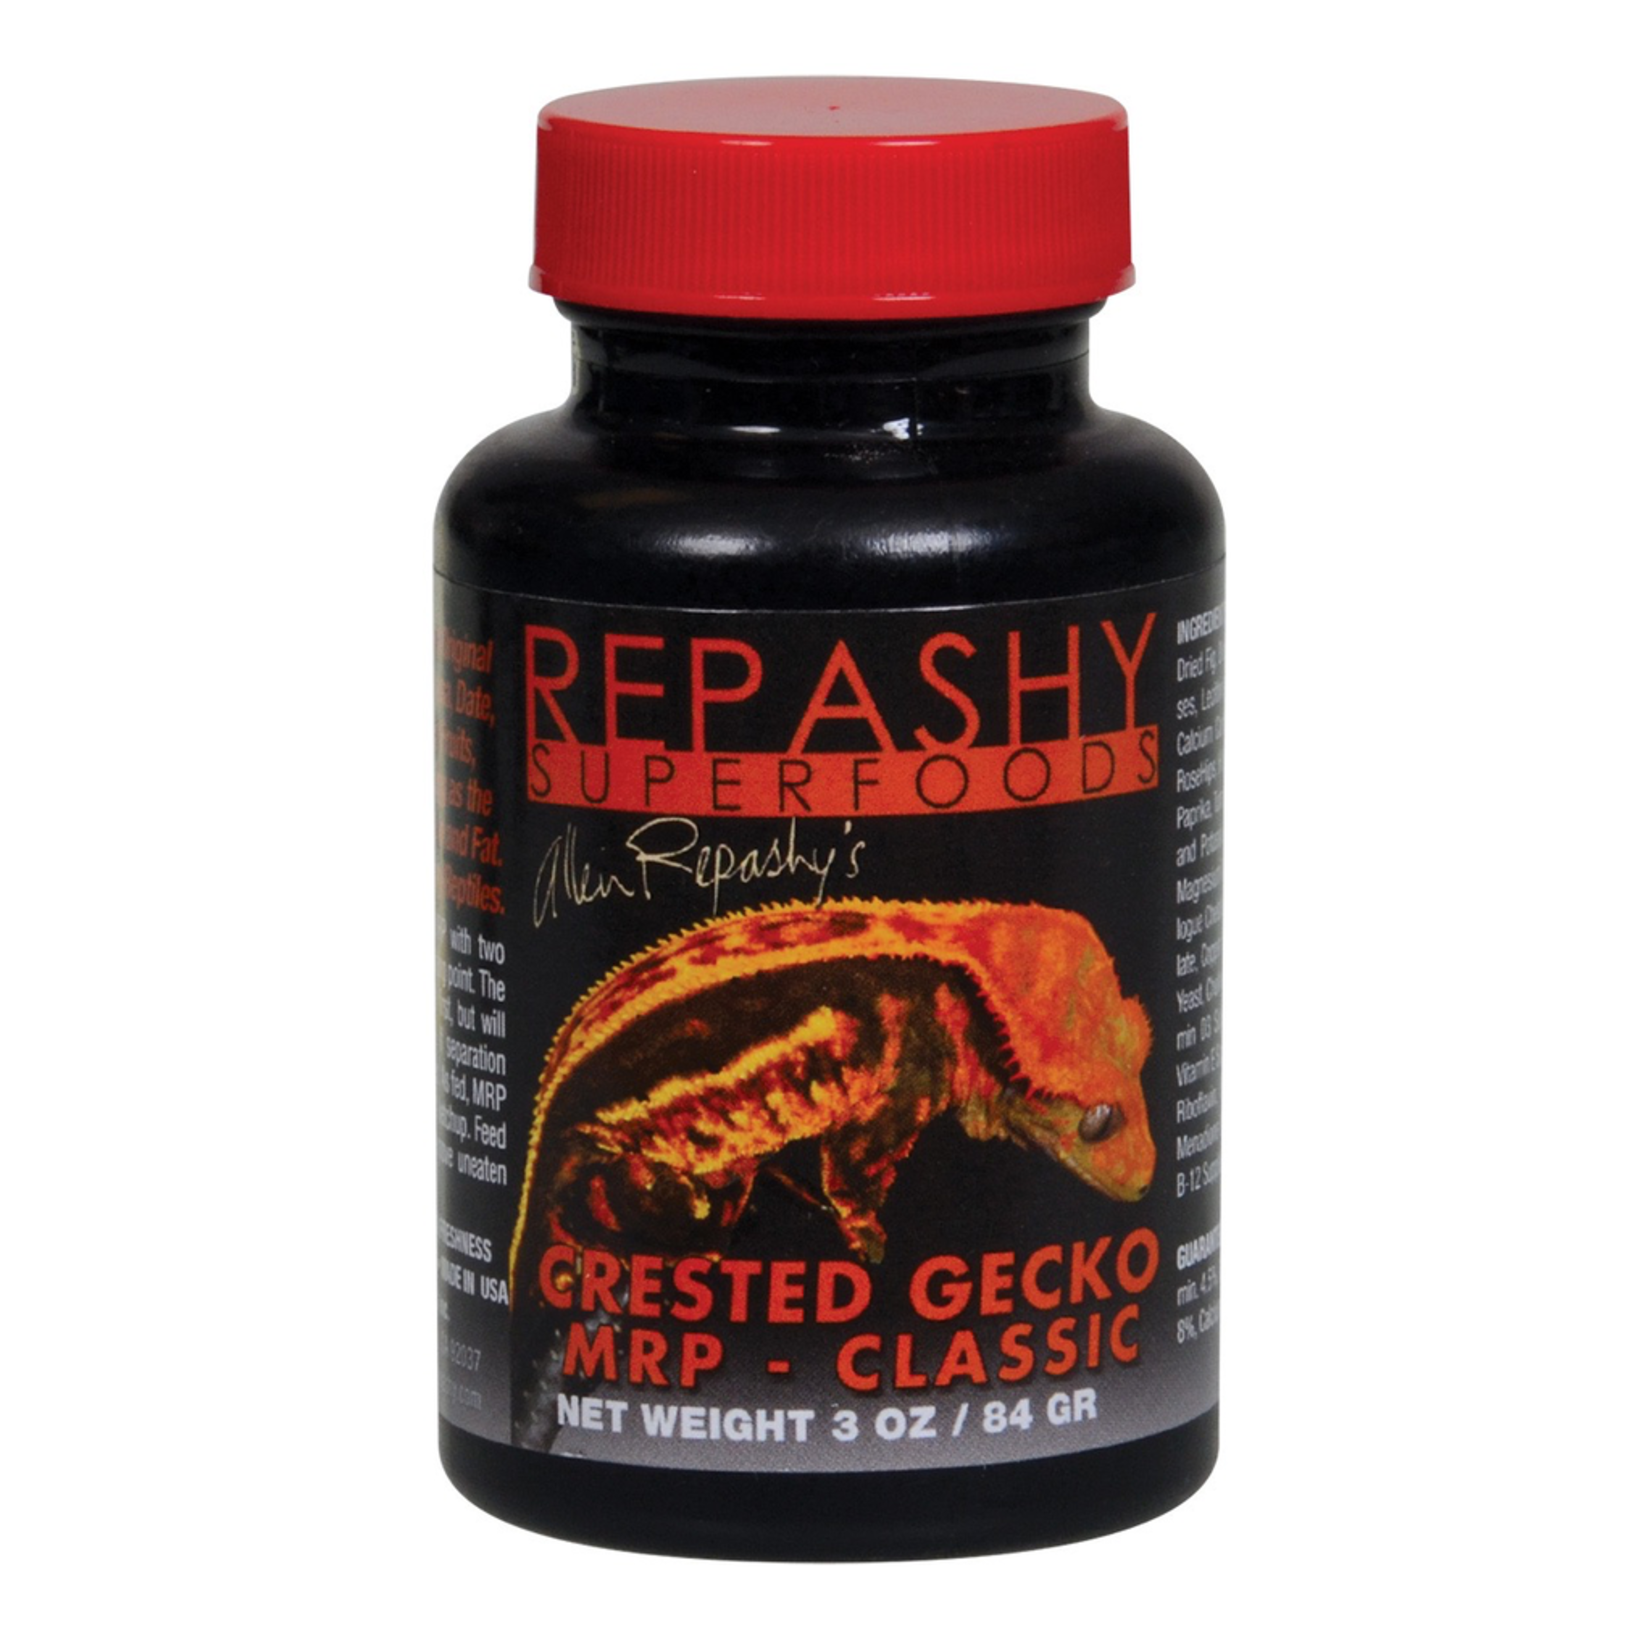 REPASHY Crested Gecko MRP Classic Enhanced Diet - 3 oz